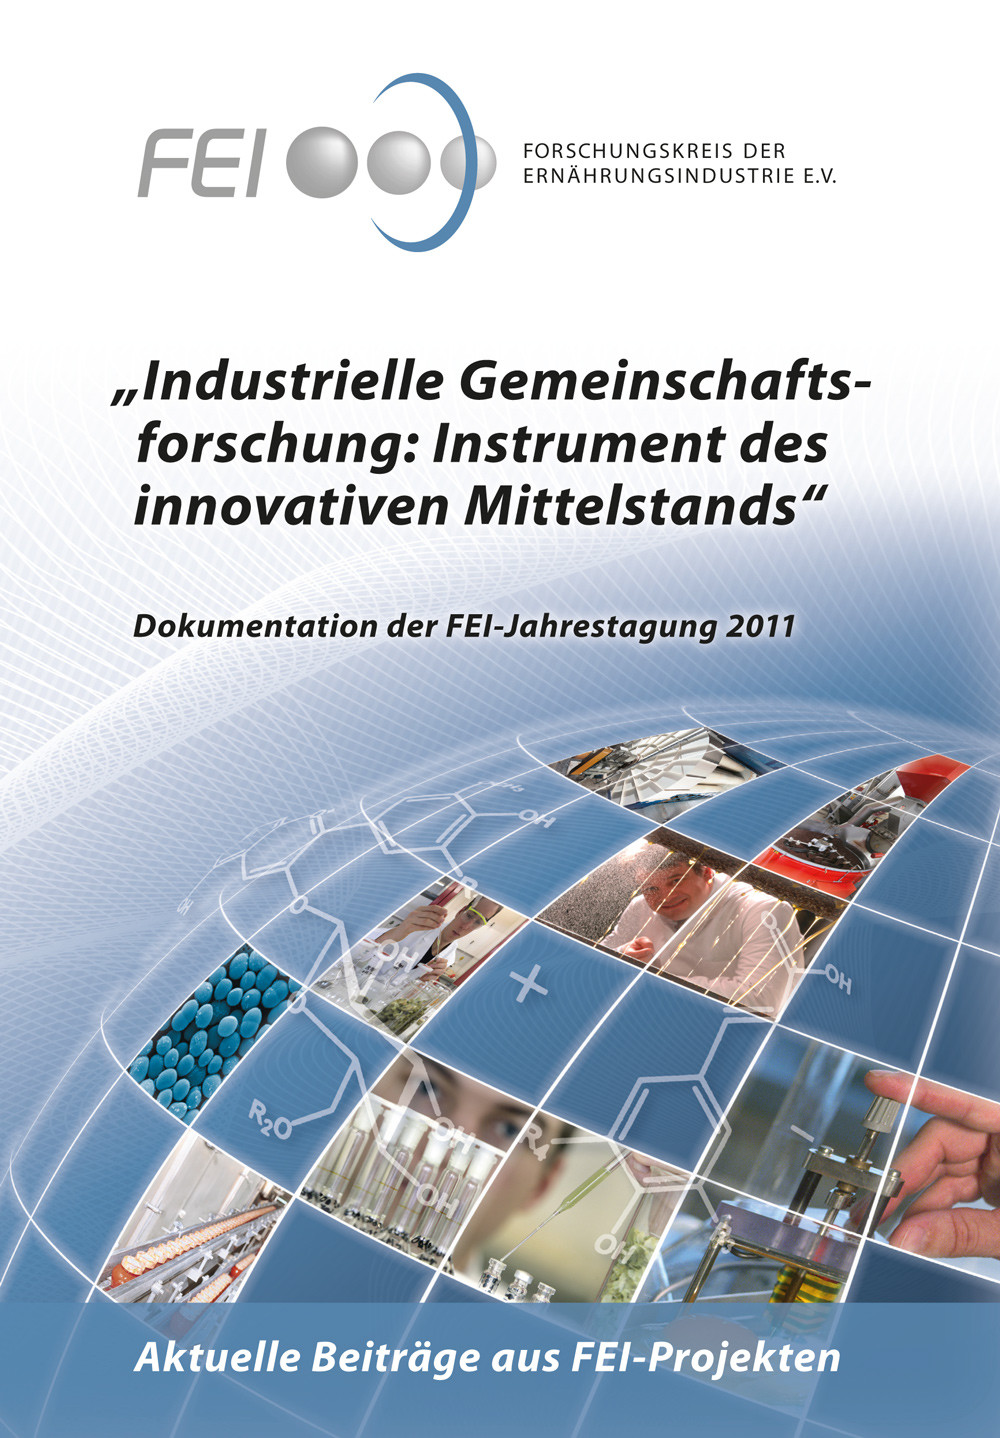 Tagungsband 2011 "Industrielle Gemeinschaftsforschung: Instrument des innovativen Mittelstands"